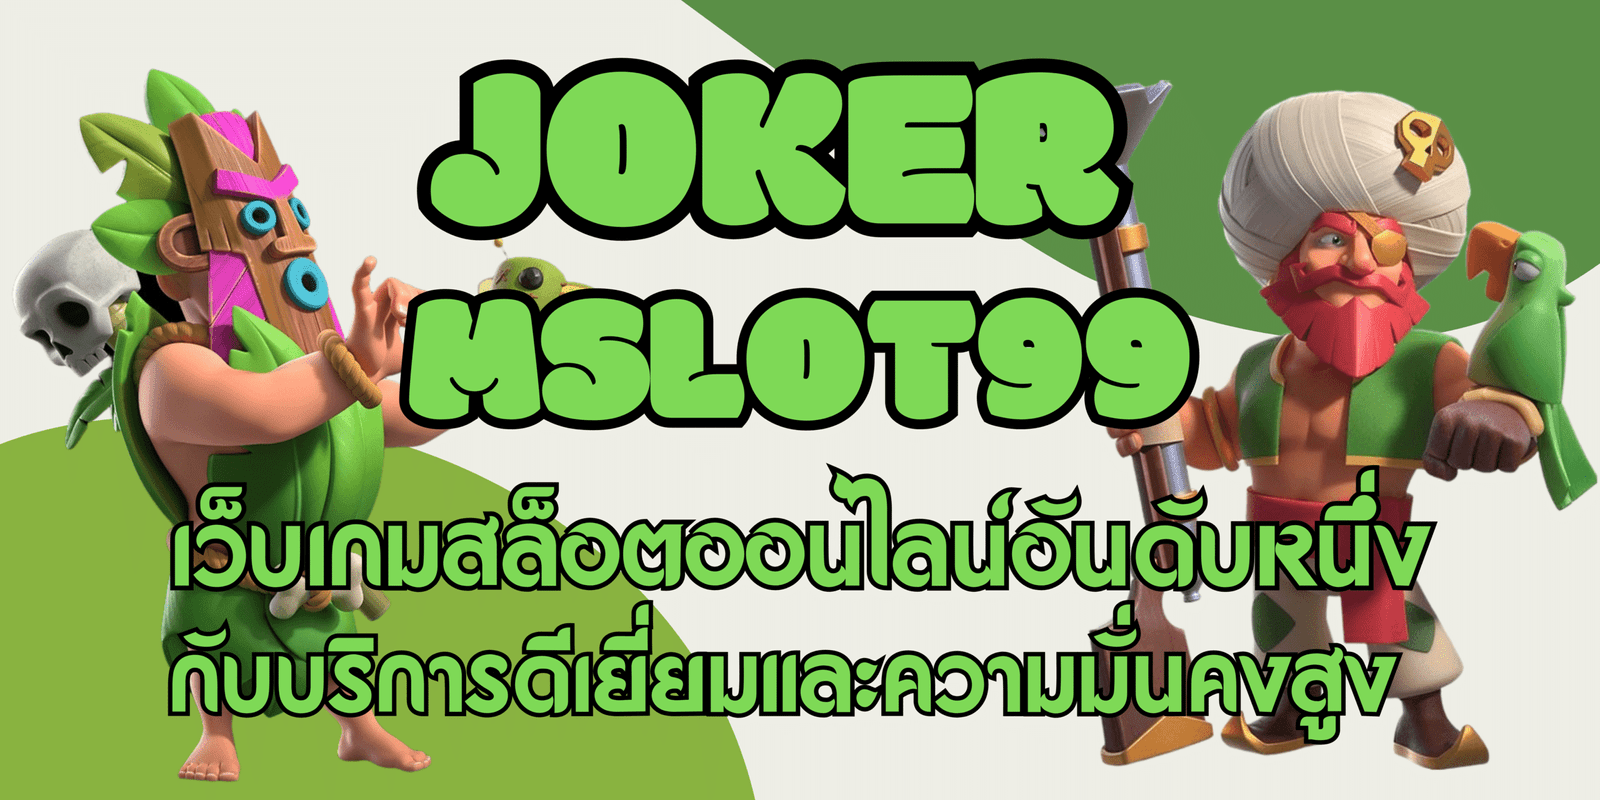 joker-mslot99-สมัครสมาชิก